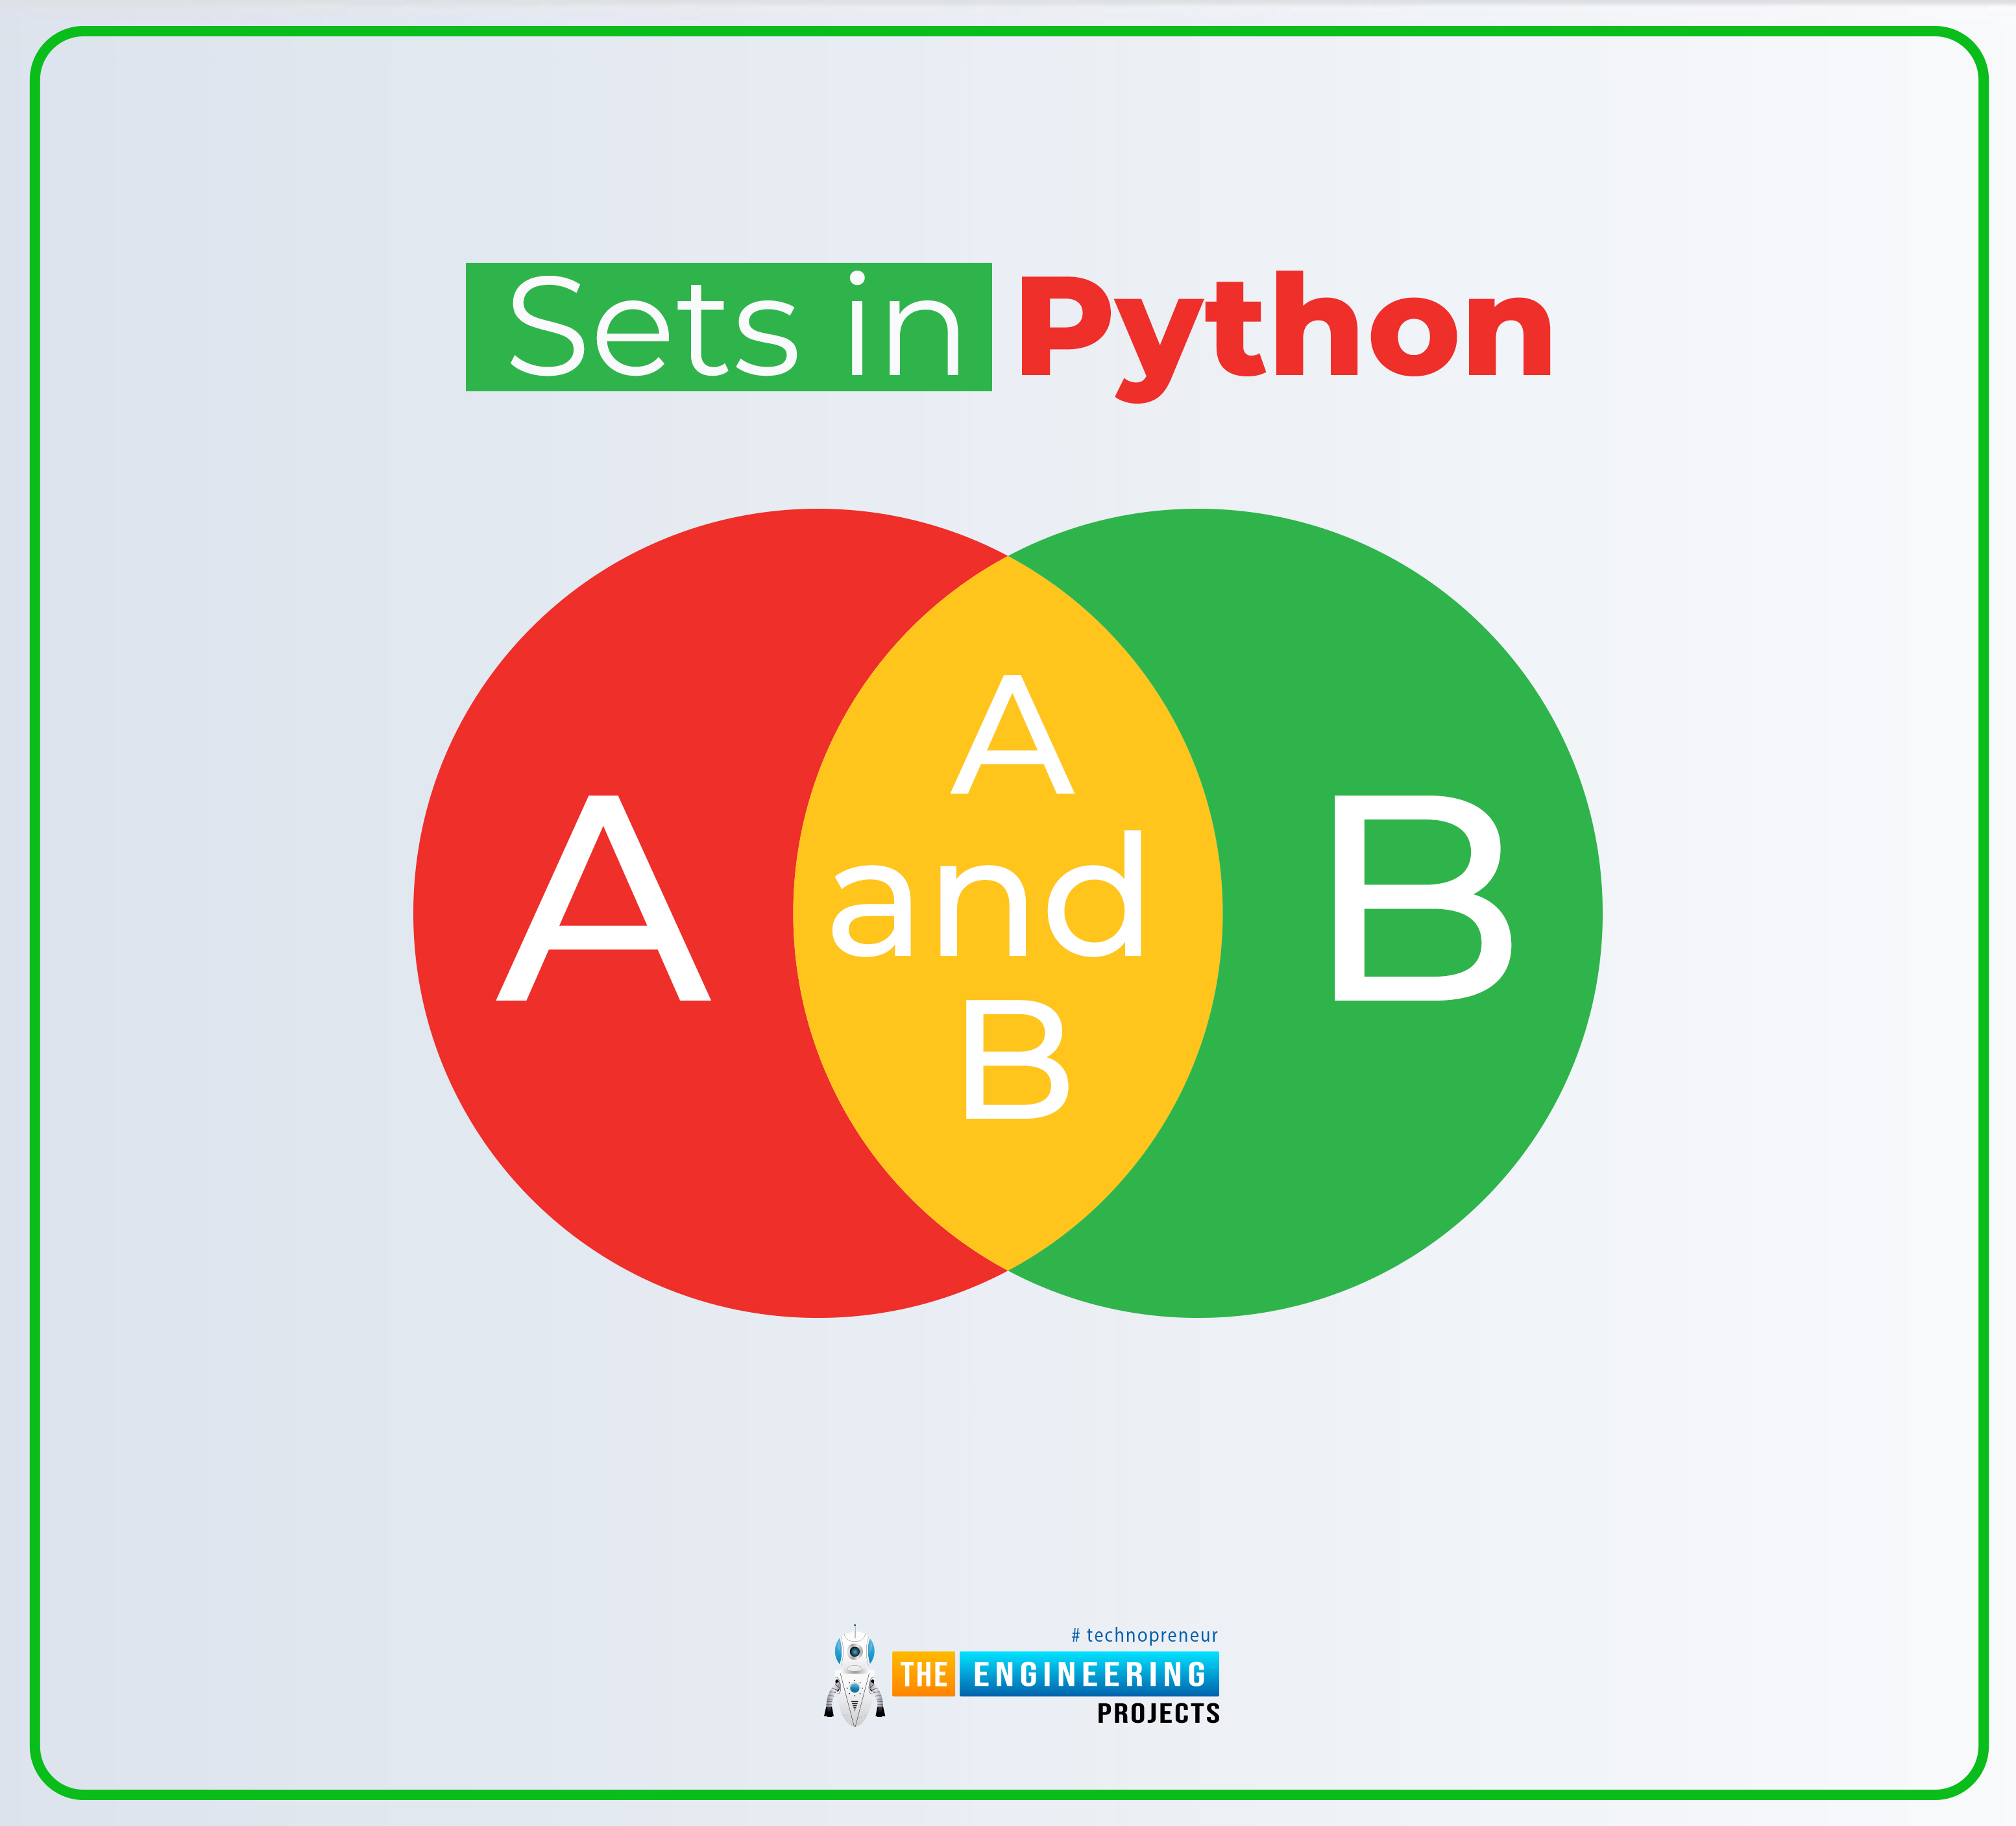 Sets in Python, python sets, sets python, python bool, bool python, how to use sets in python, use python sets